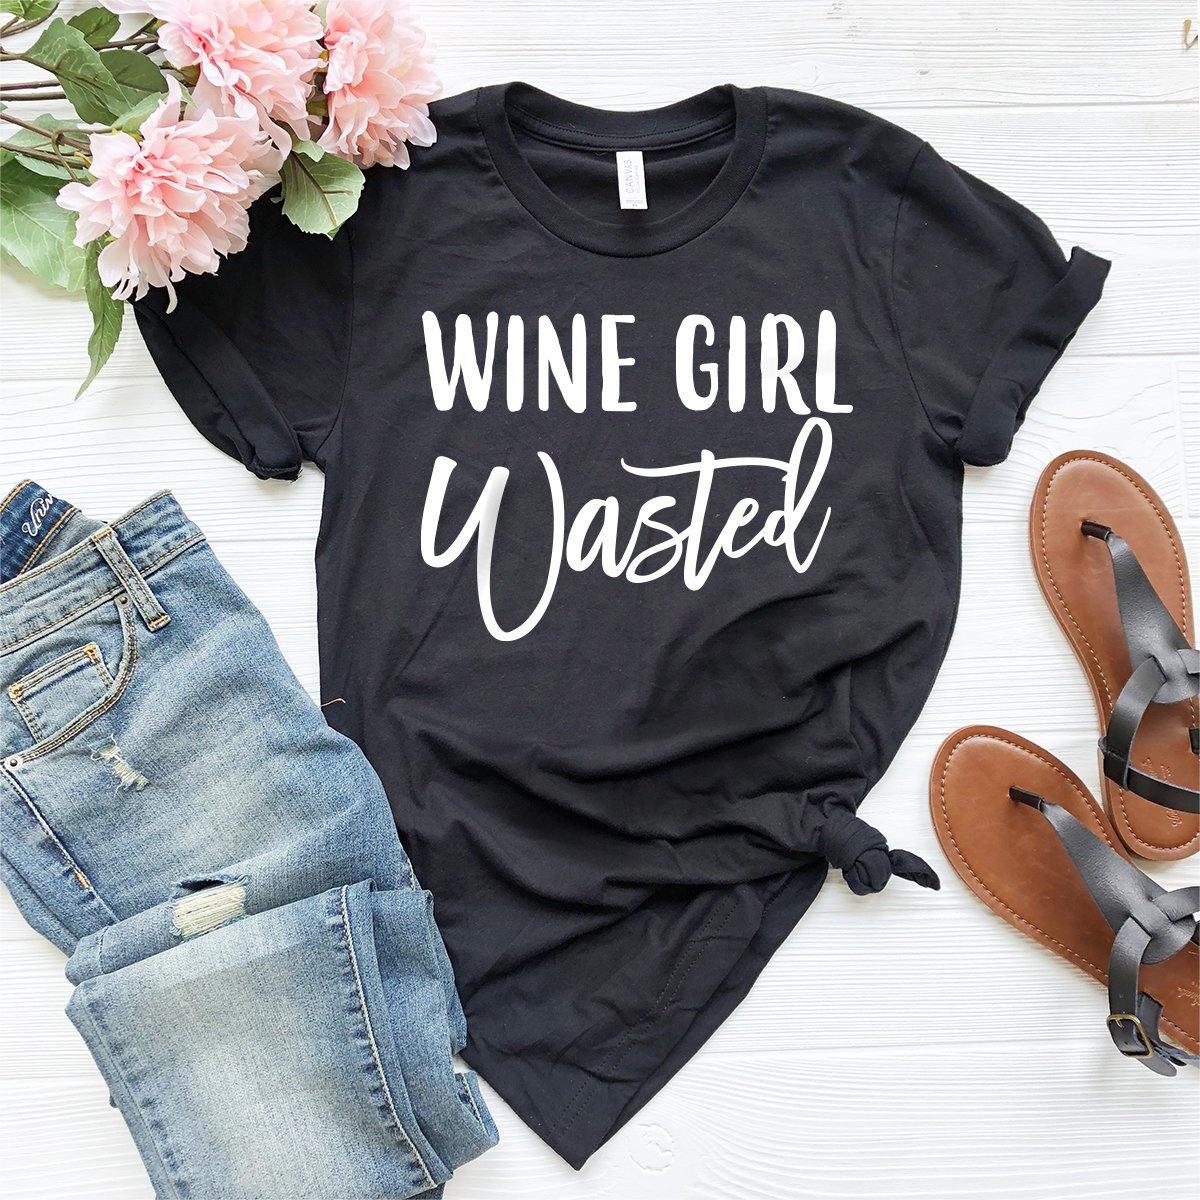 Wine Bachelorette Party T-Shirt, Wine Shirt, Drink Wine Shirt, Wine Girl Wasted Tee, Wine Tee, Drinking Wine Shirt, Drink Shirt, Wine Tshirt - Fastdeliverytees.com